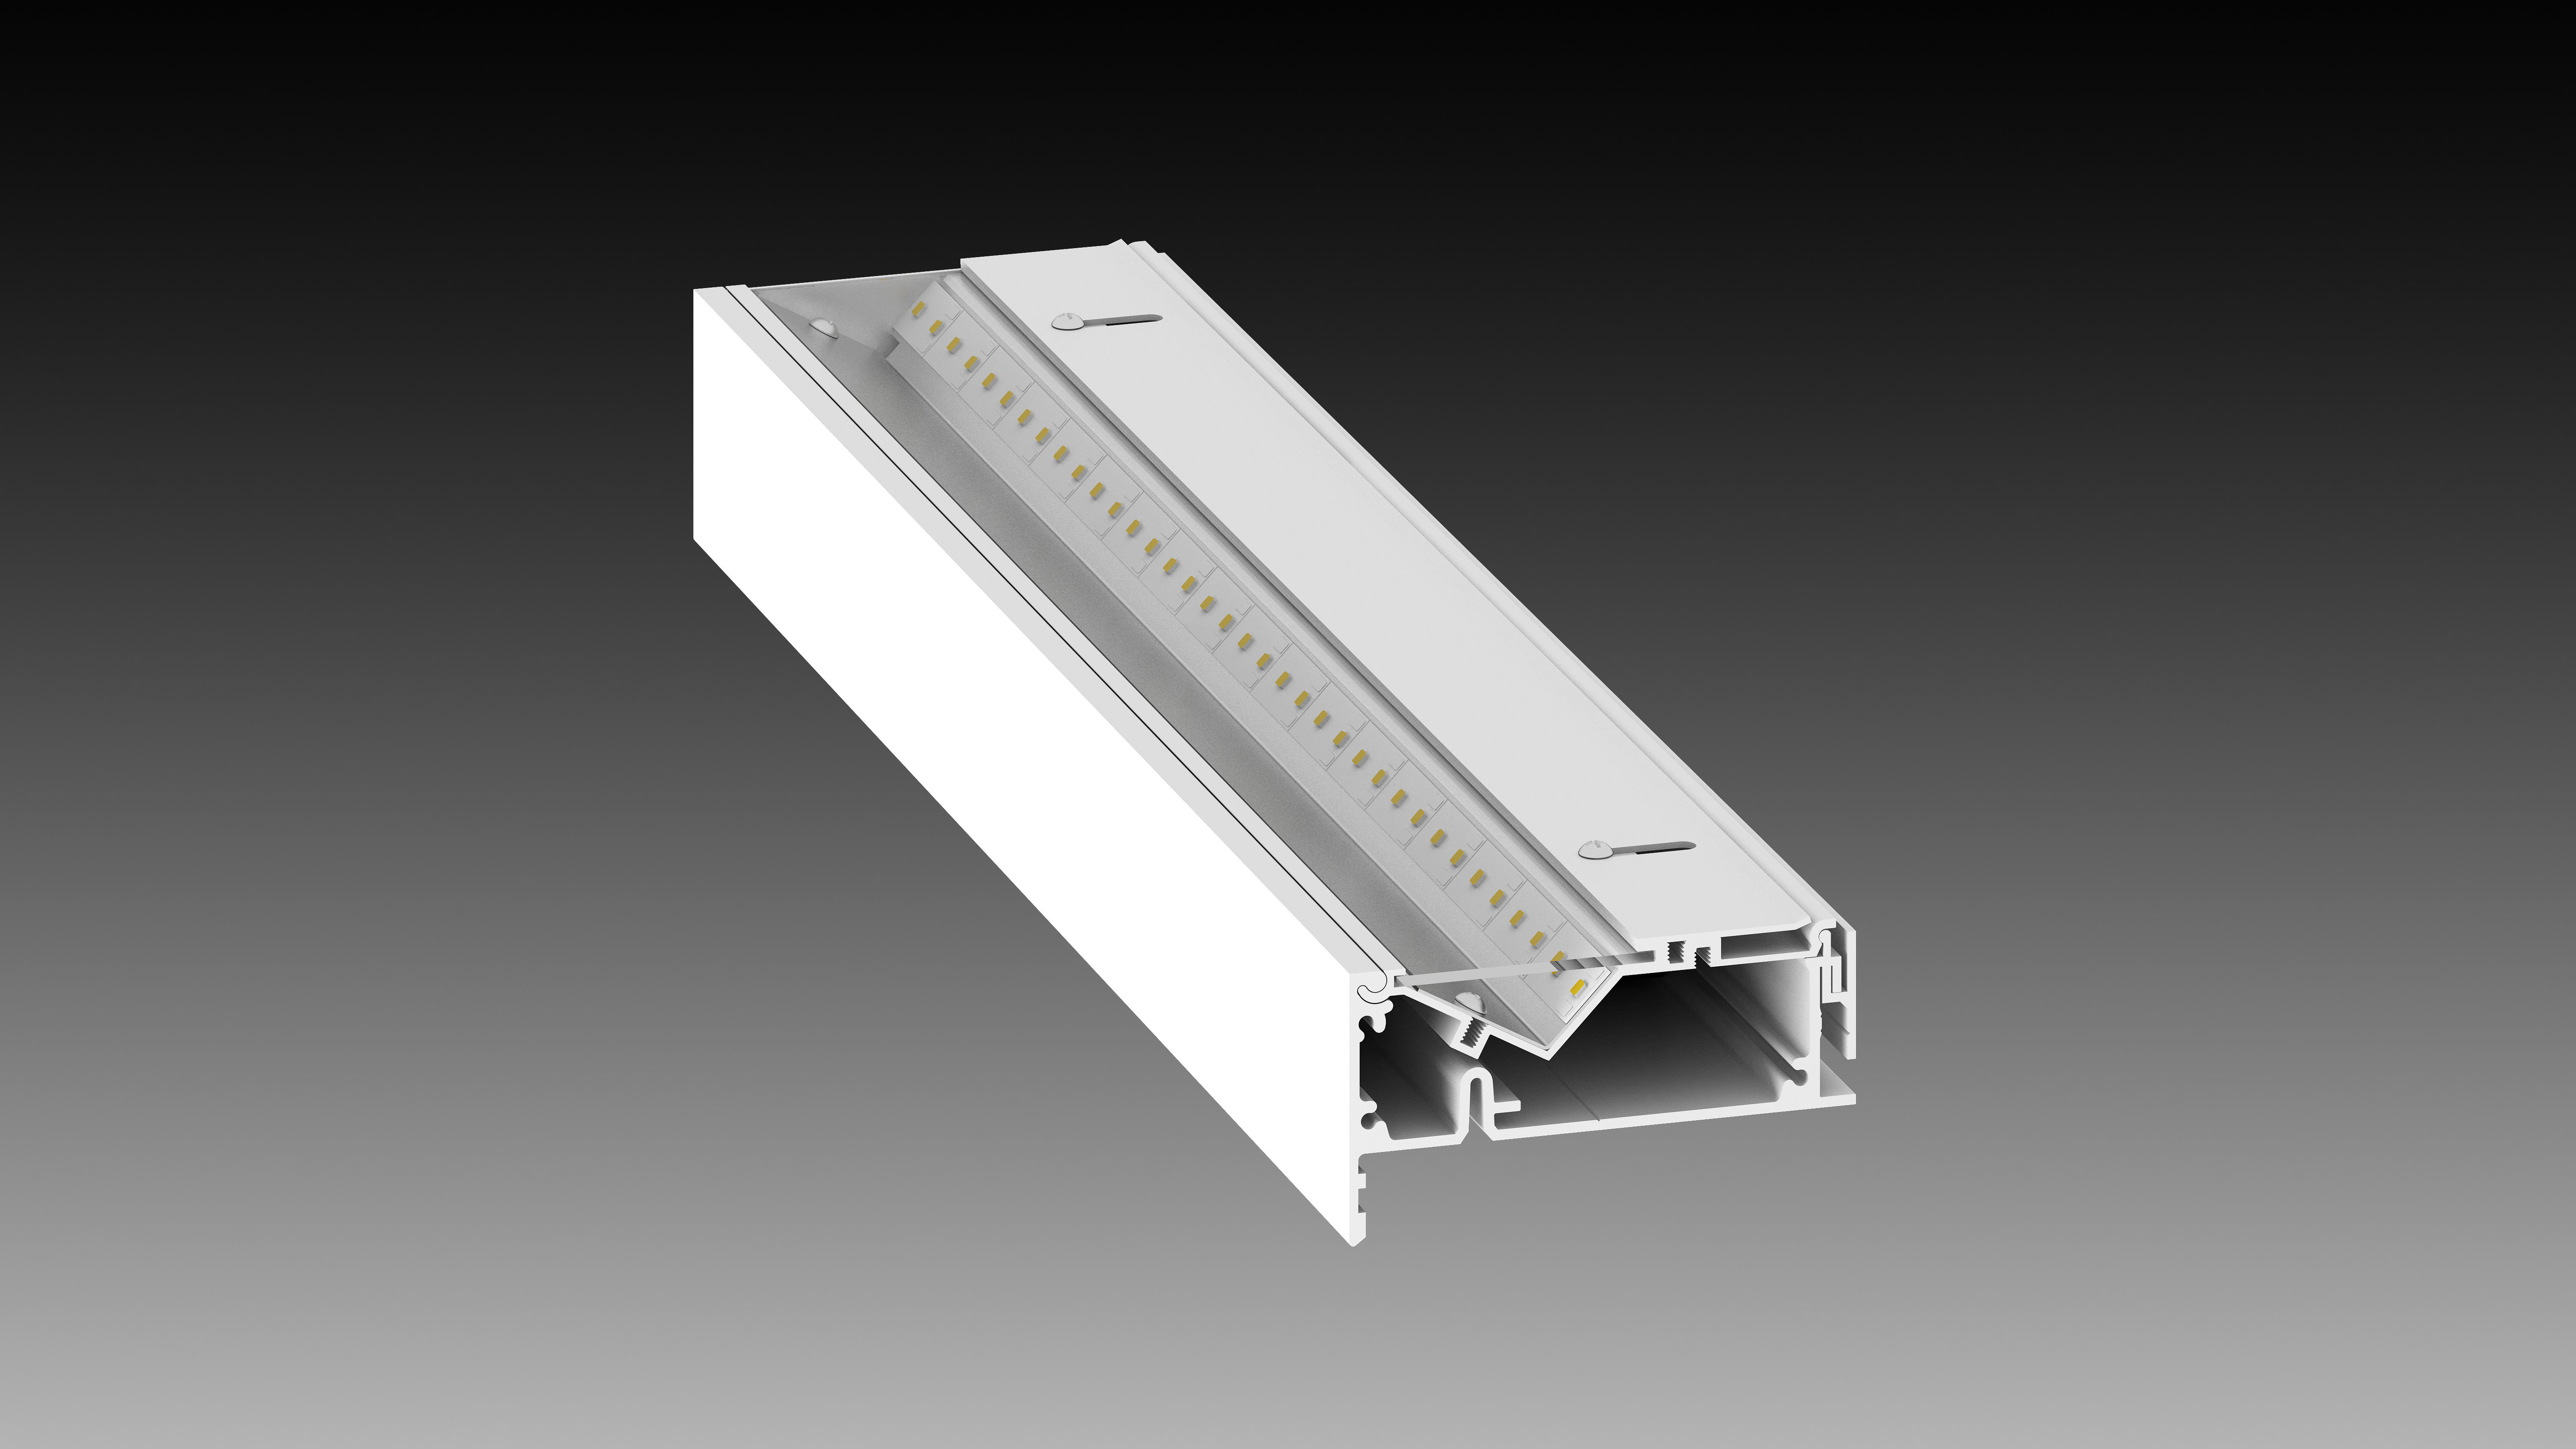 straight-edge asymmetric LED cove lighting fixtures